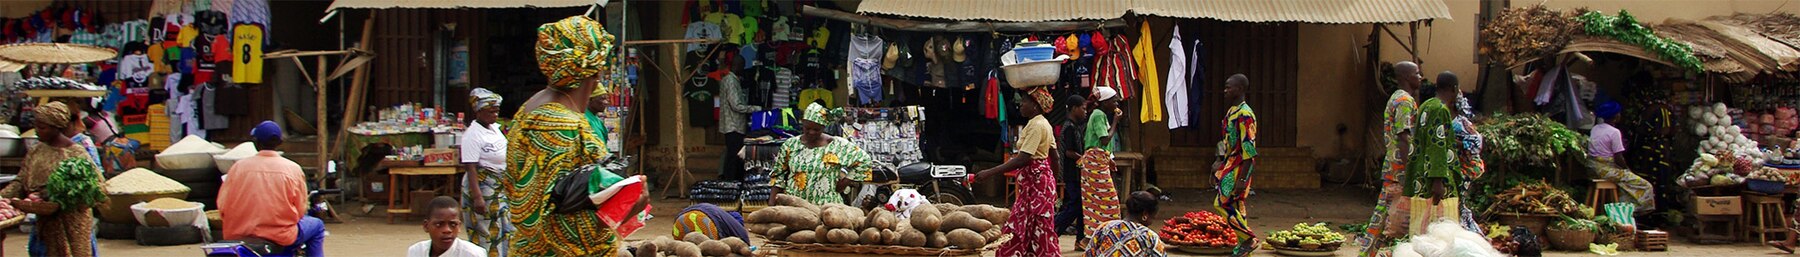 Ouando Market Porto-Novo Benin banner.jpg